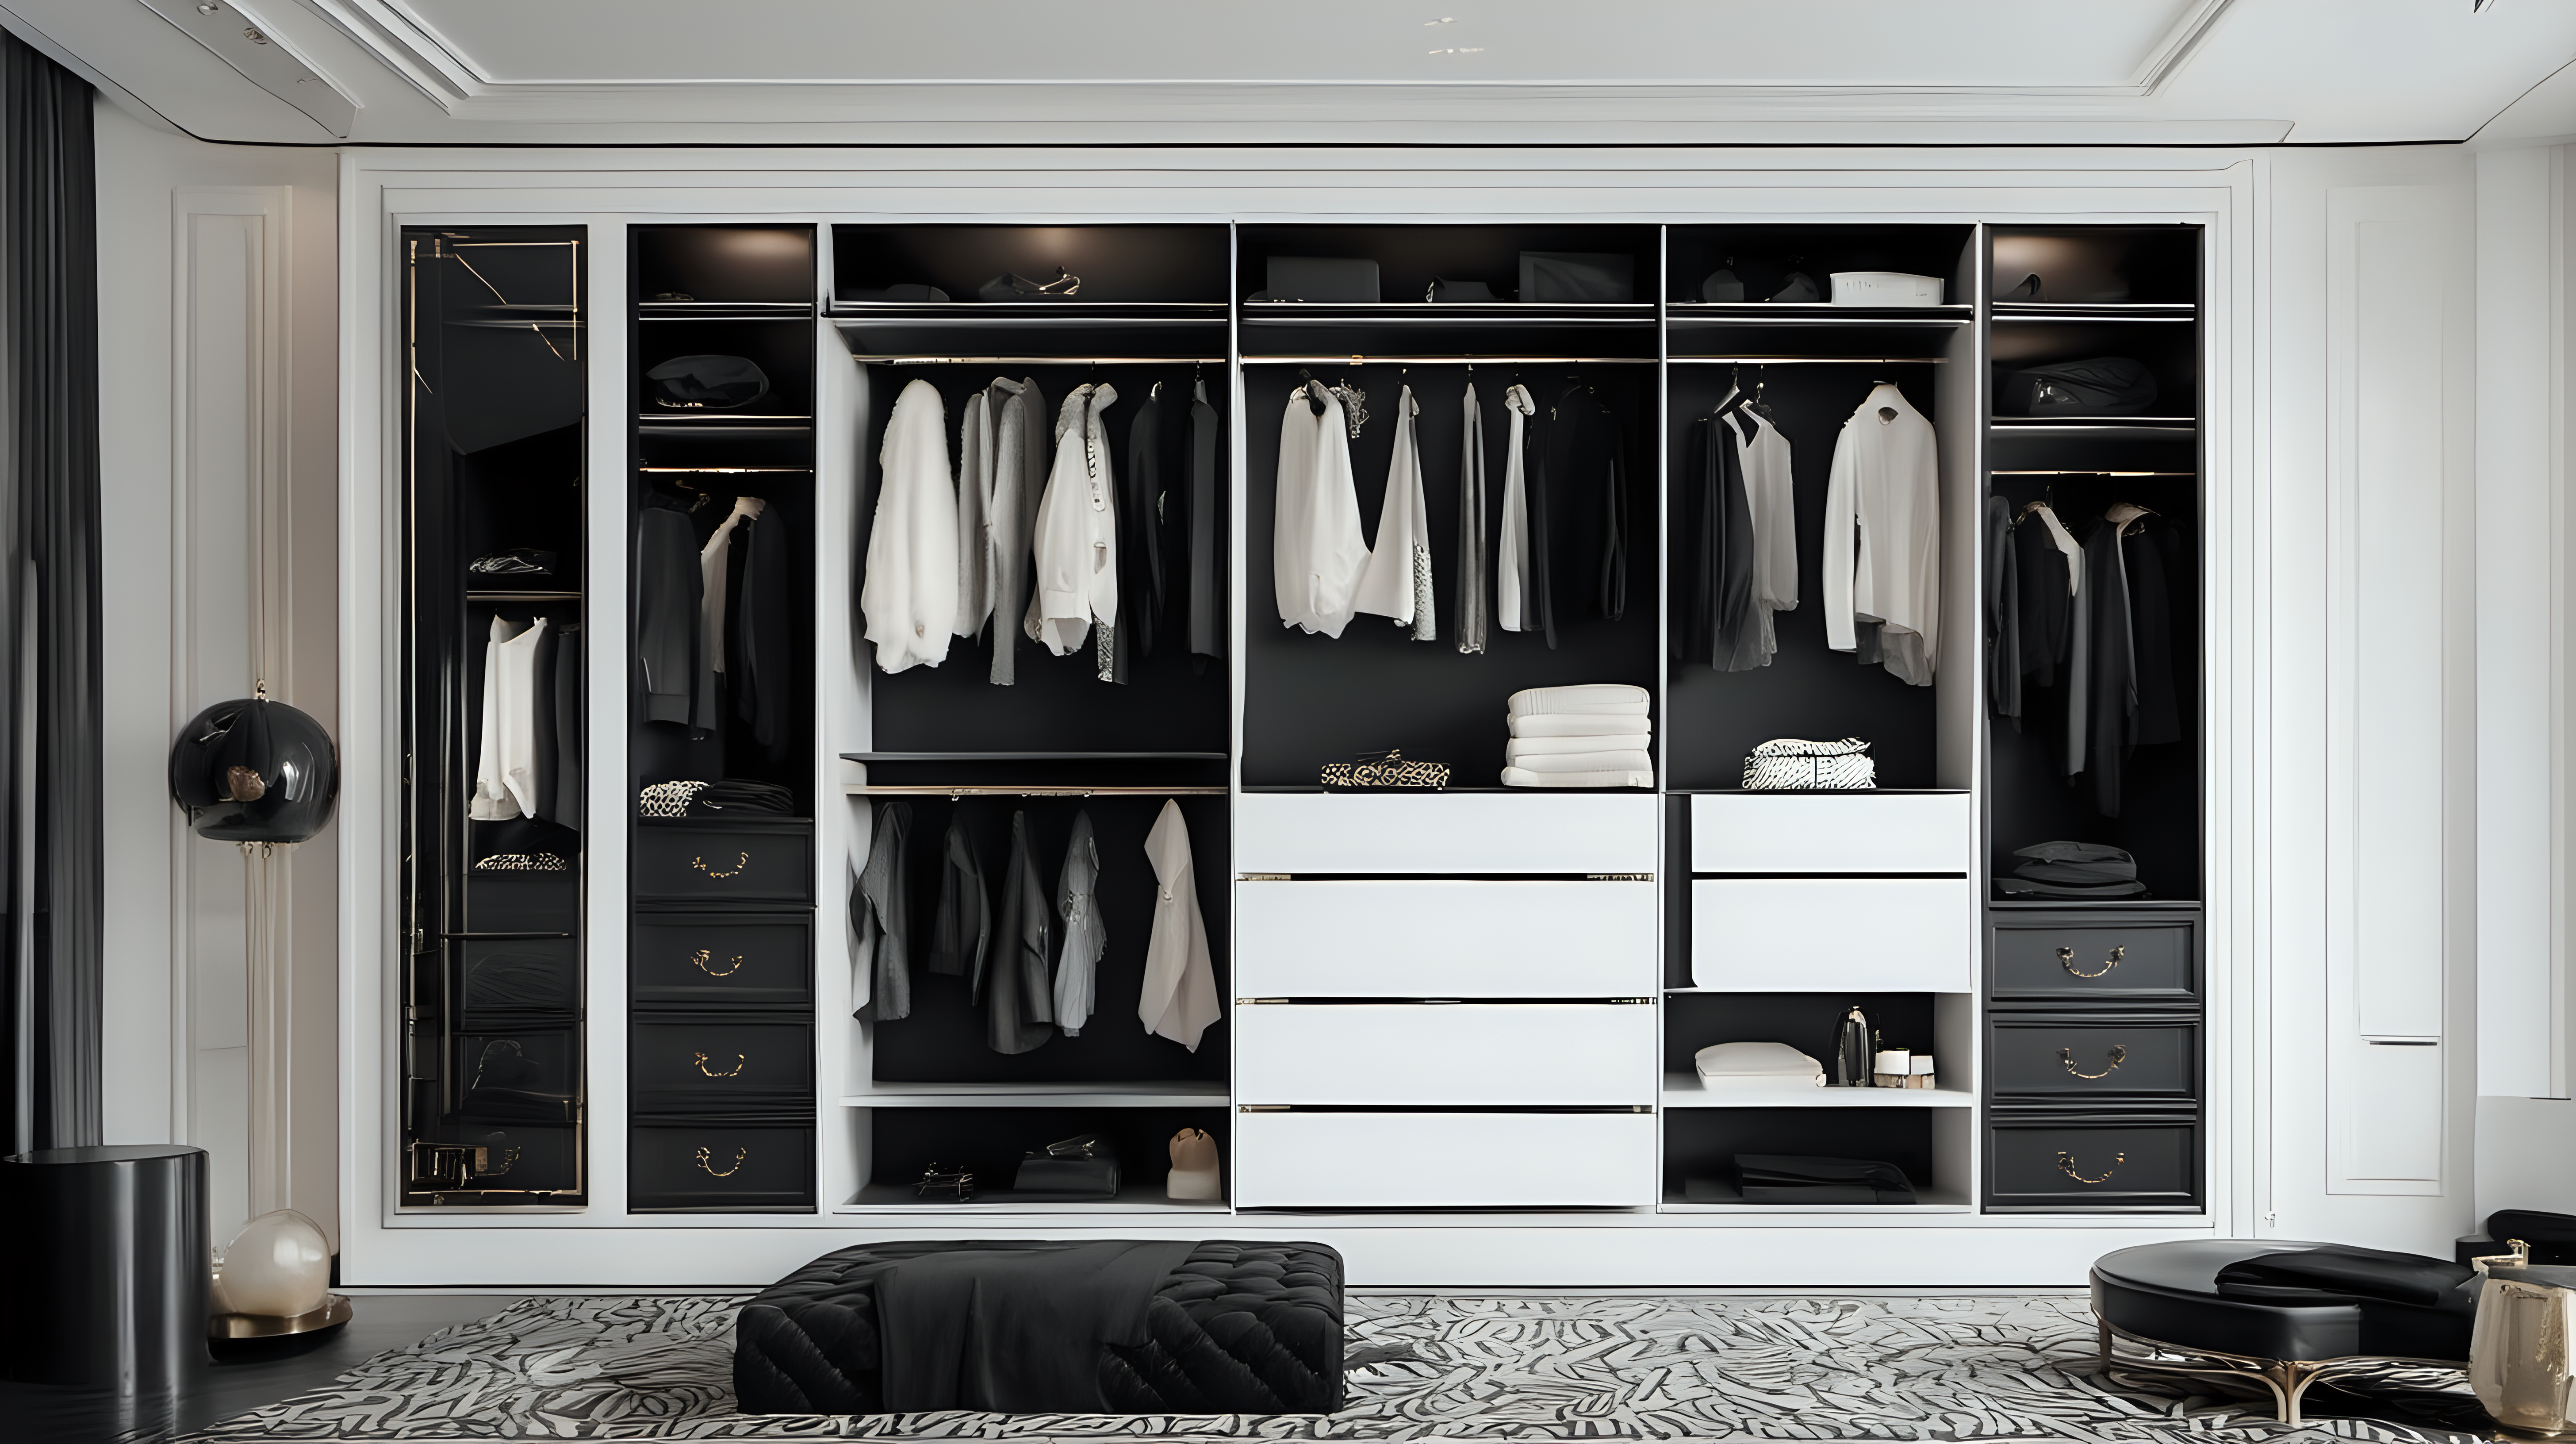 cozy Interior wardrobe with black and white luxury